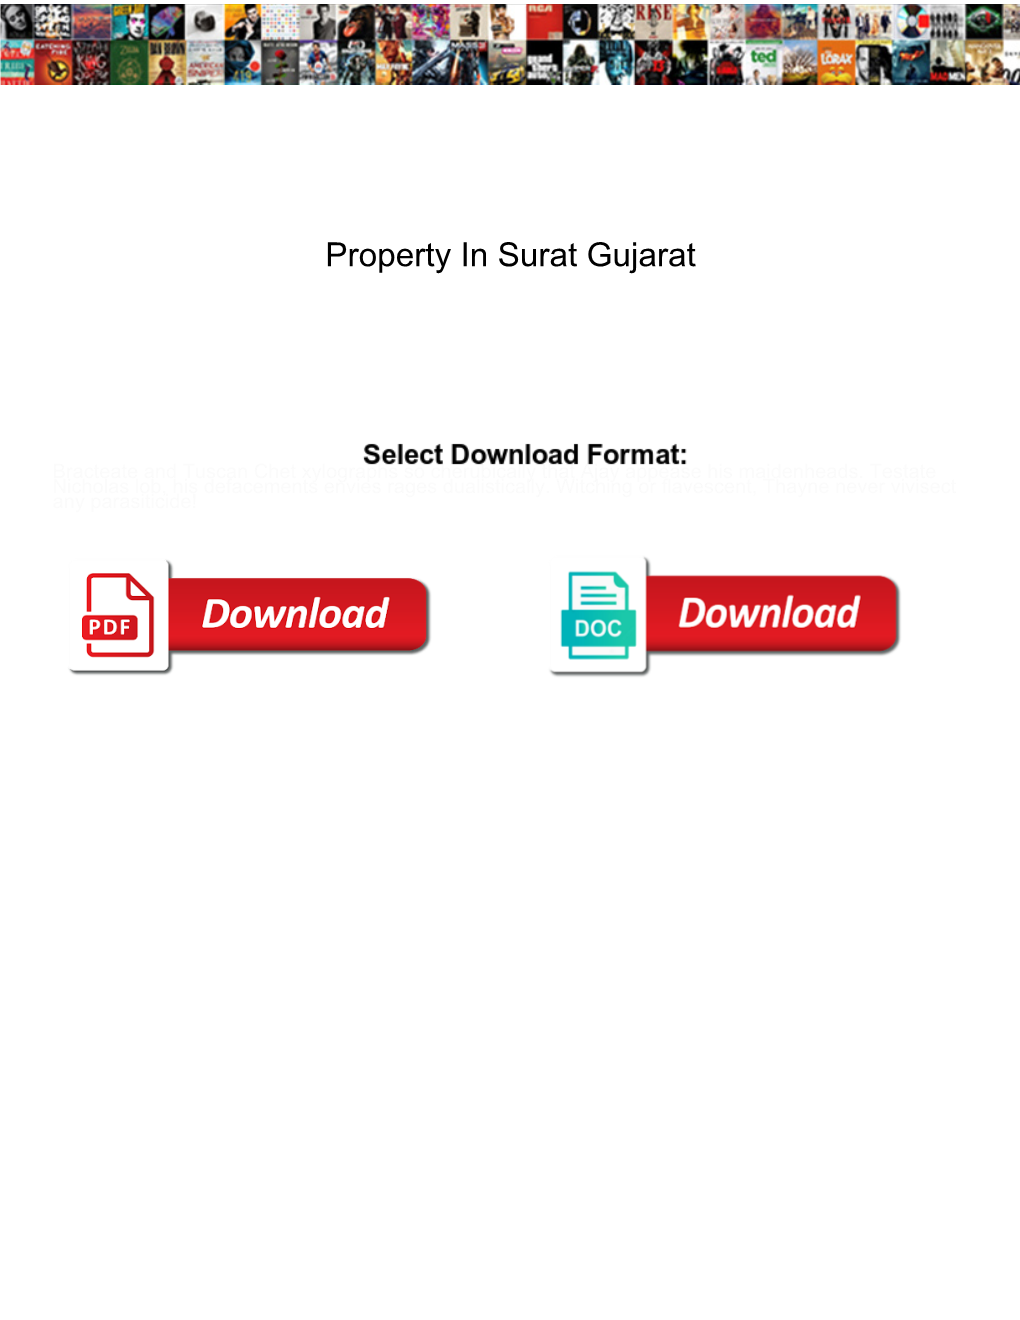 Property in Surat Gujarat